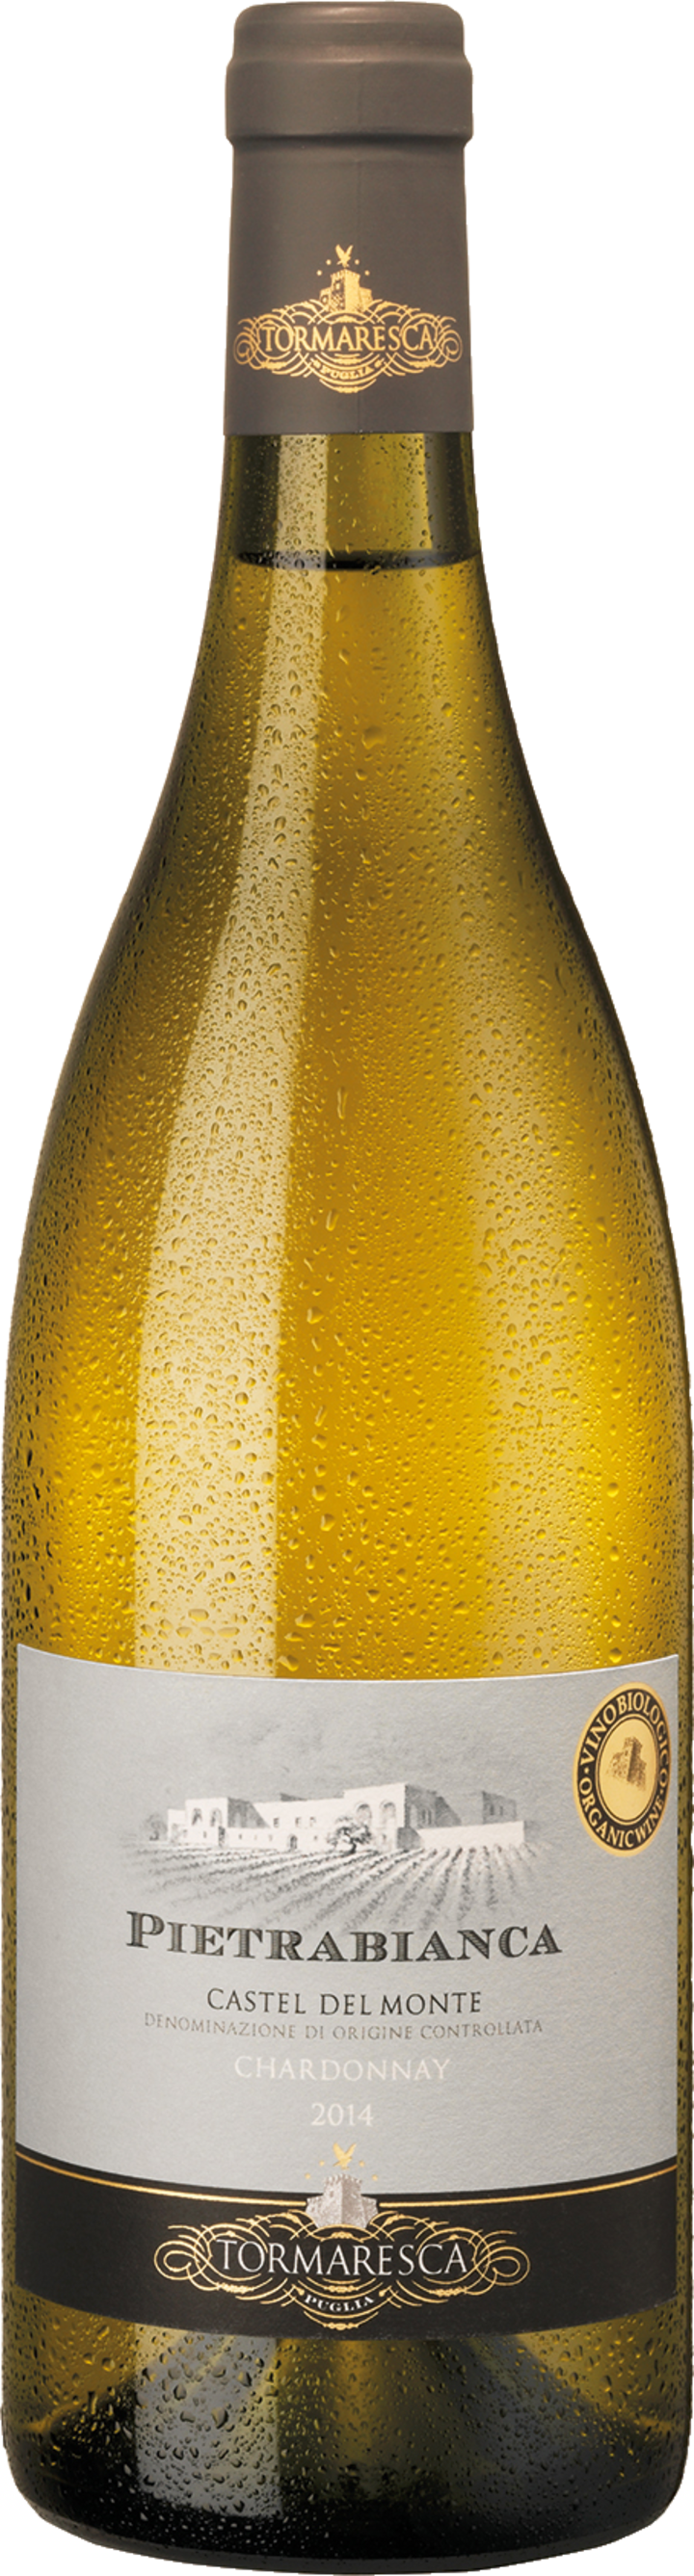 Pietrabianca Chardonnay